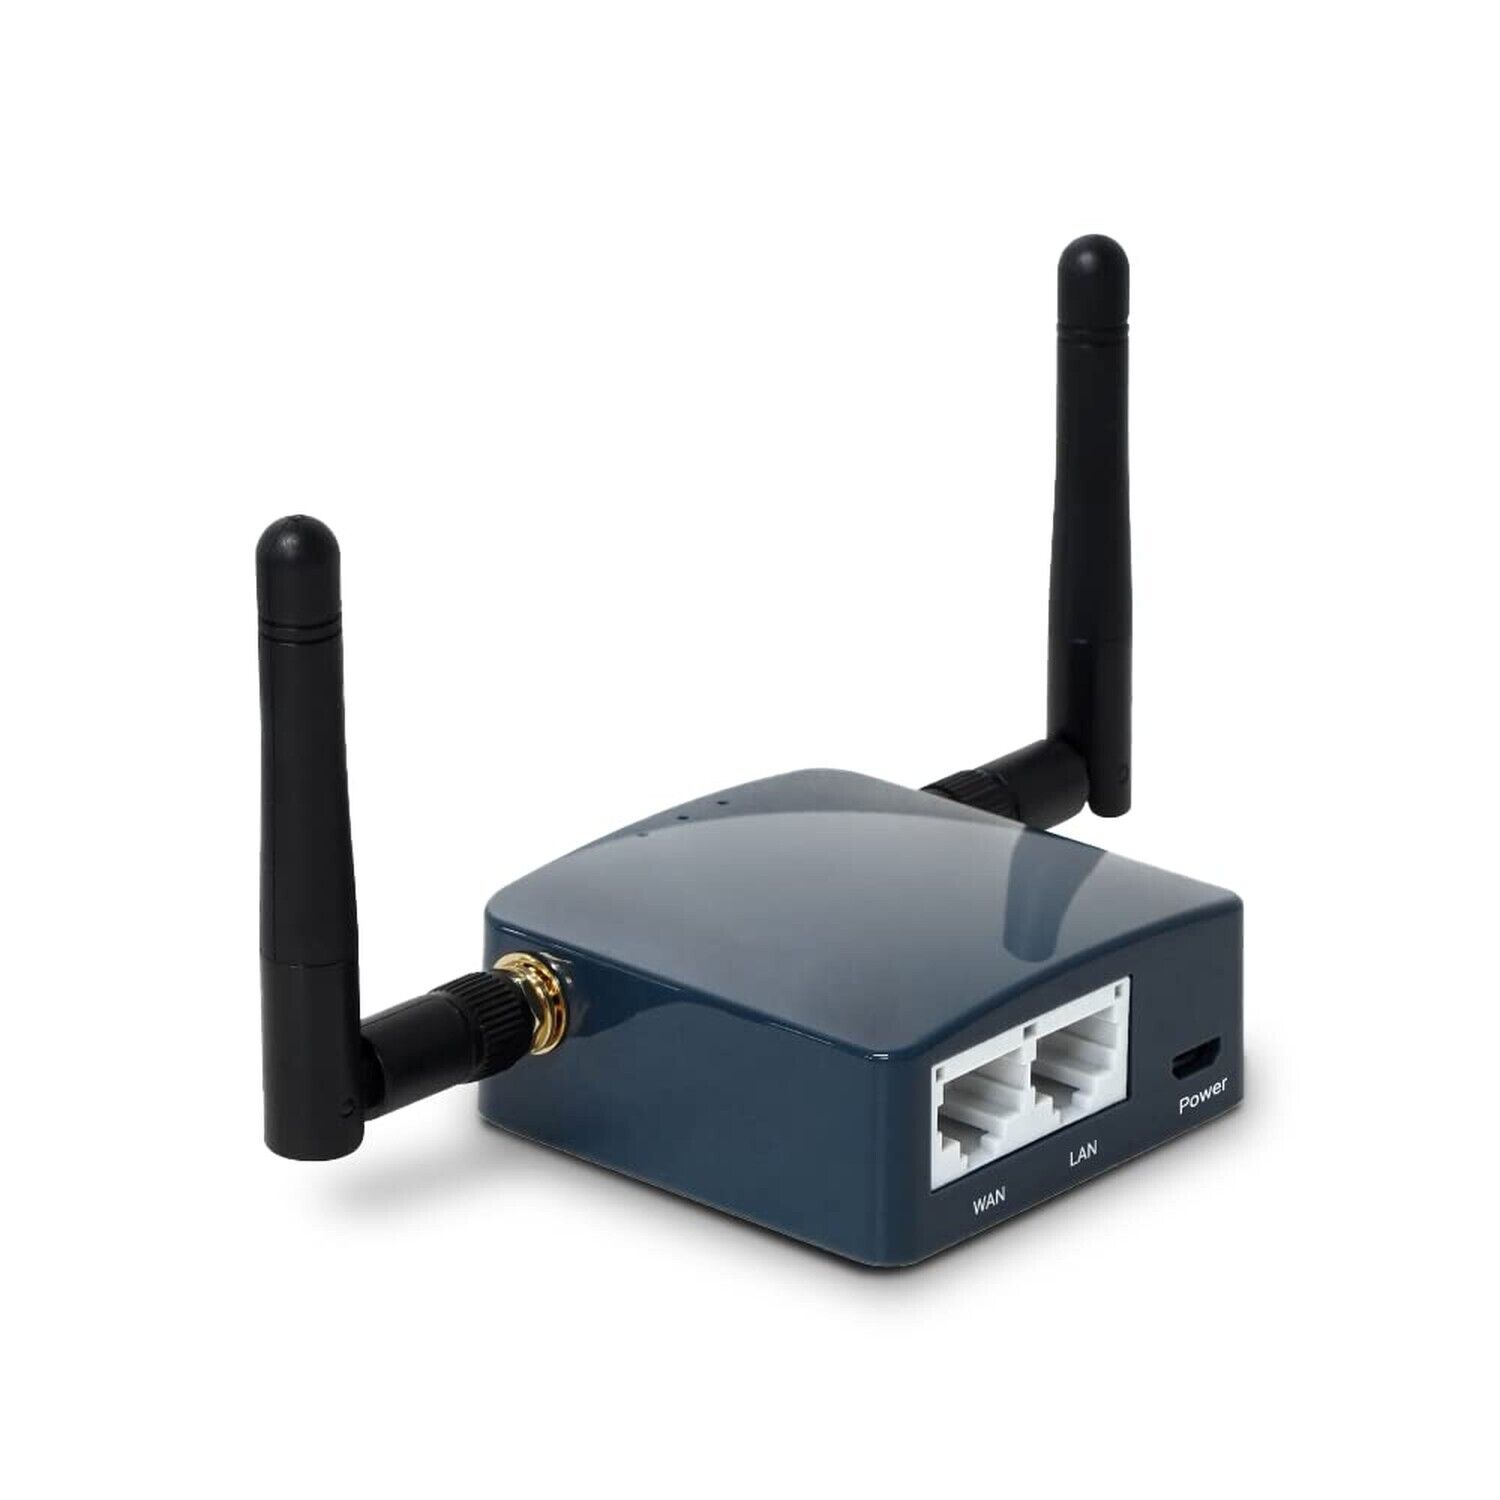 GL.iNet GL-AR300M16-Ext Portable Mini Travel Wireless Pocket Router - WiFi Ro...